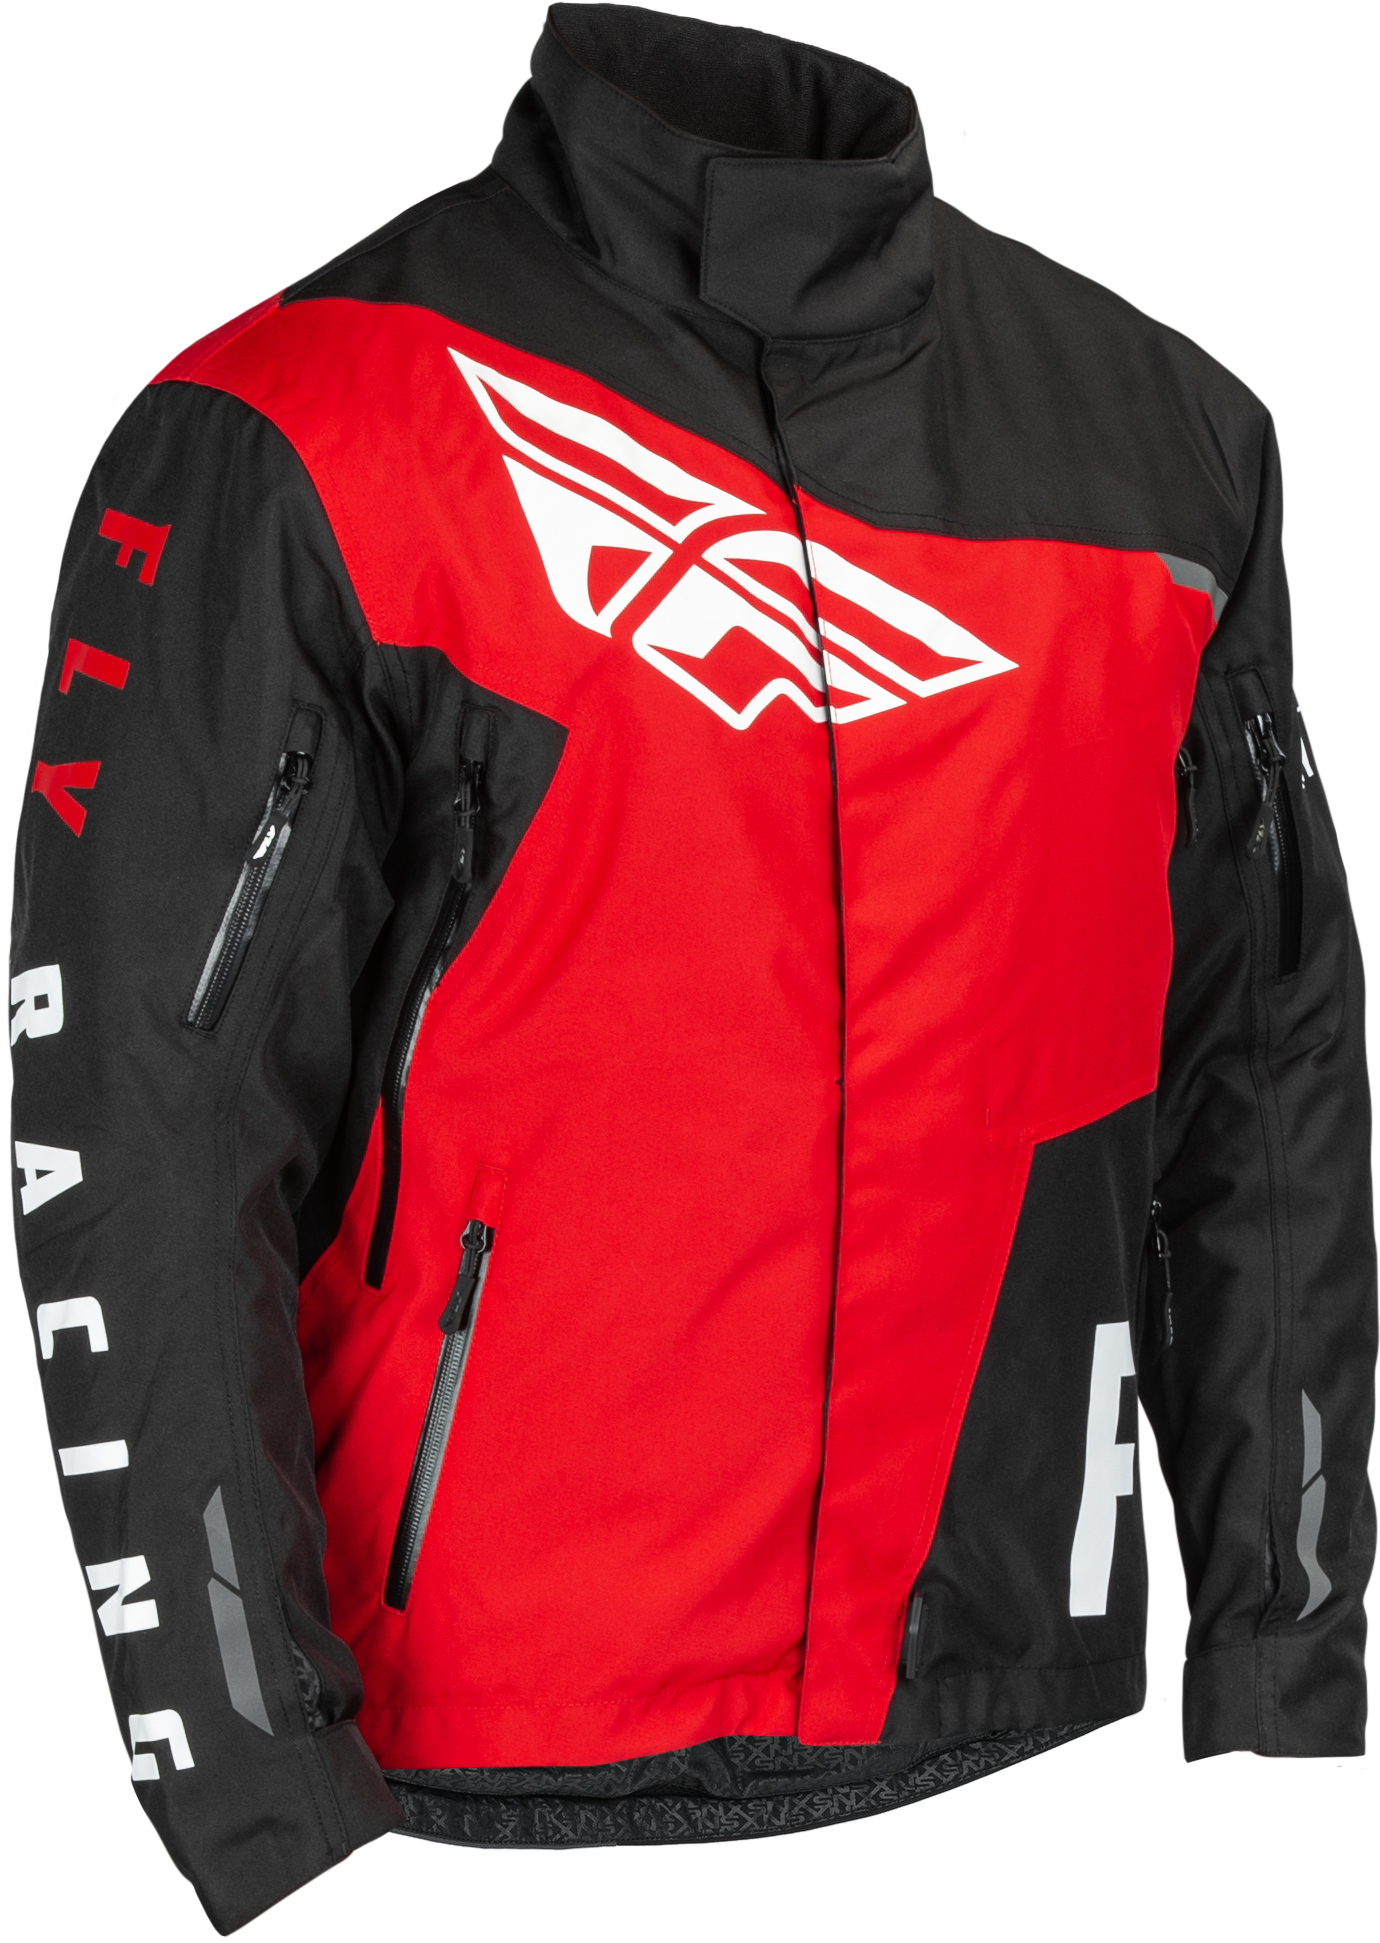 FLY RACING Snx Pro Jacket Black/Red 3x 470-54023X